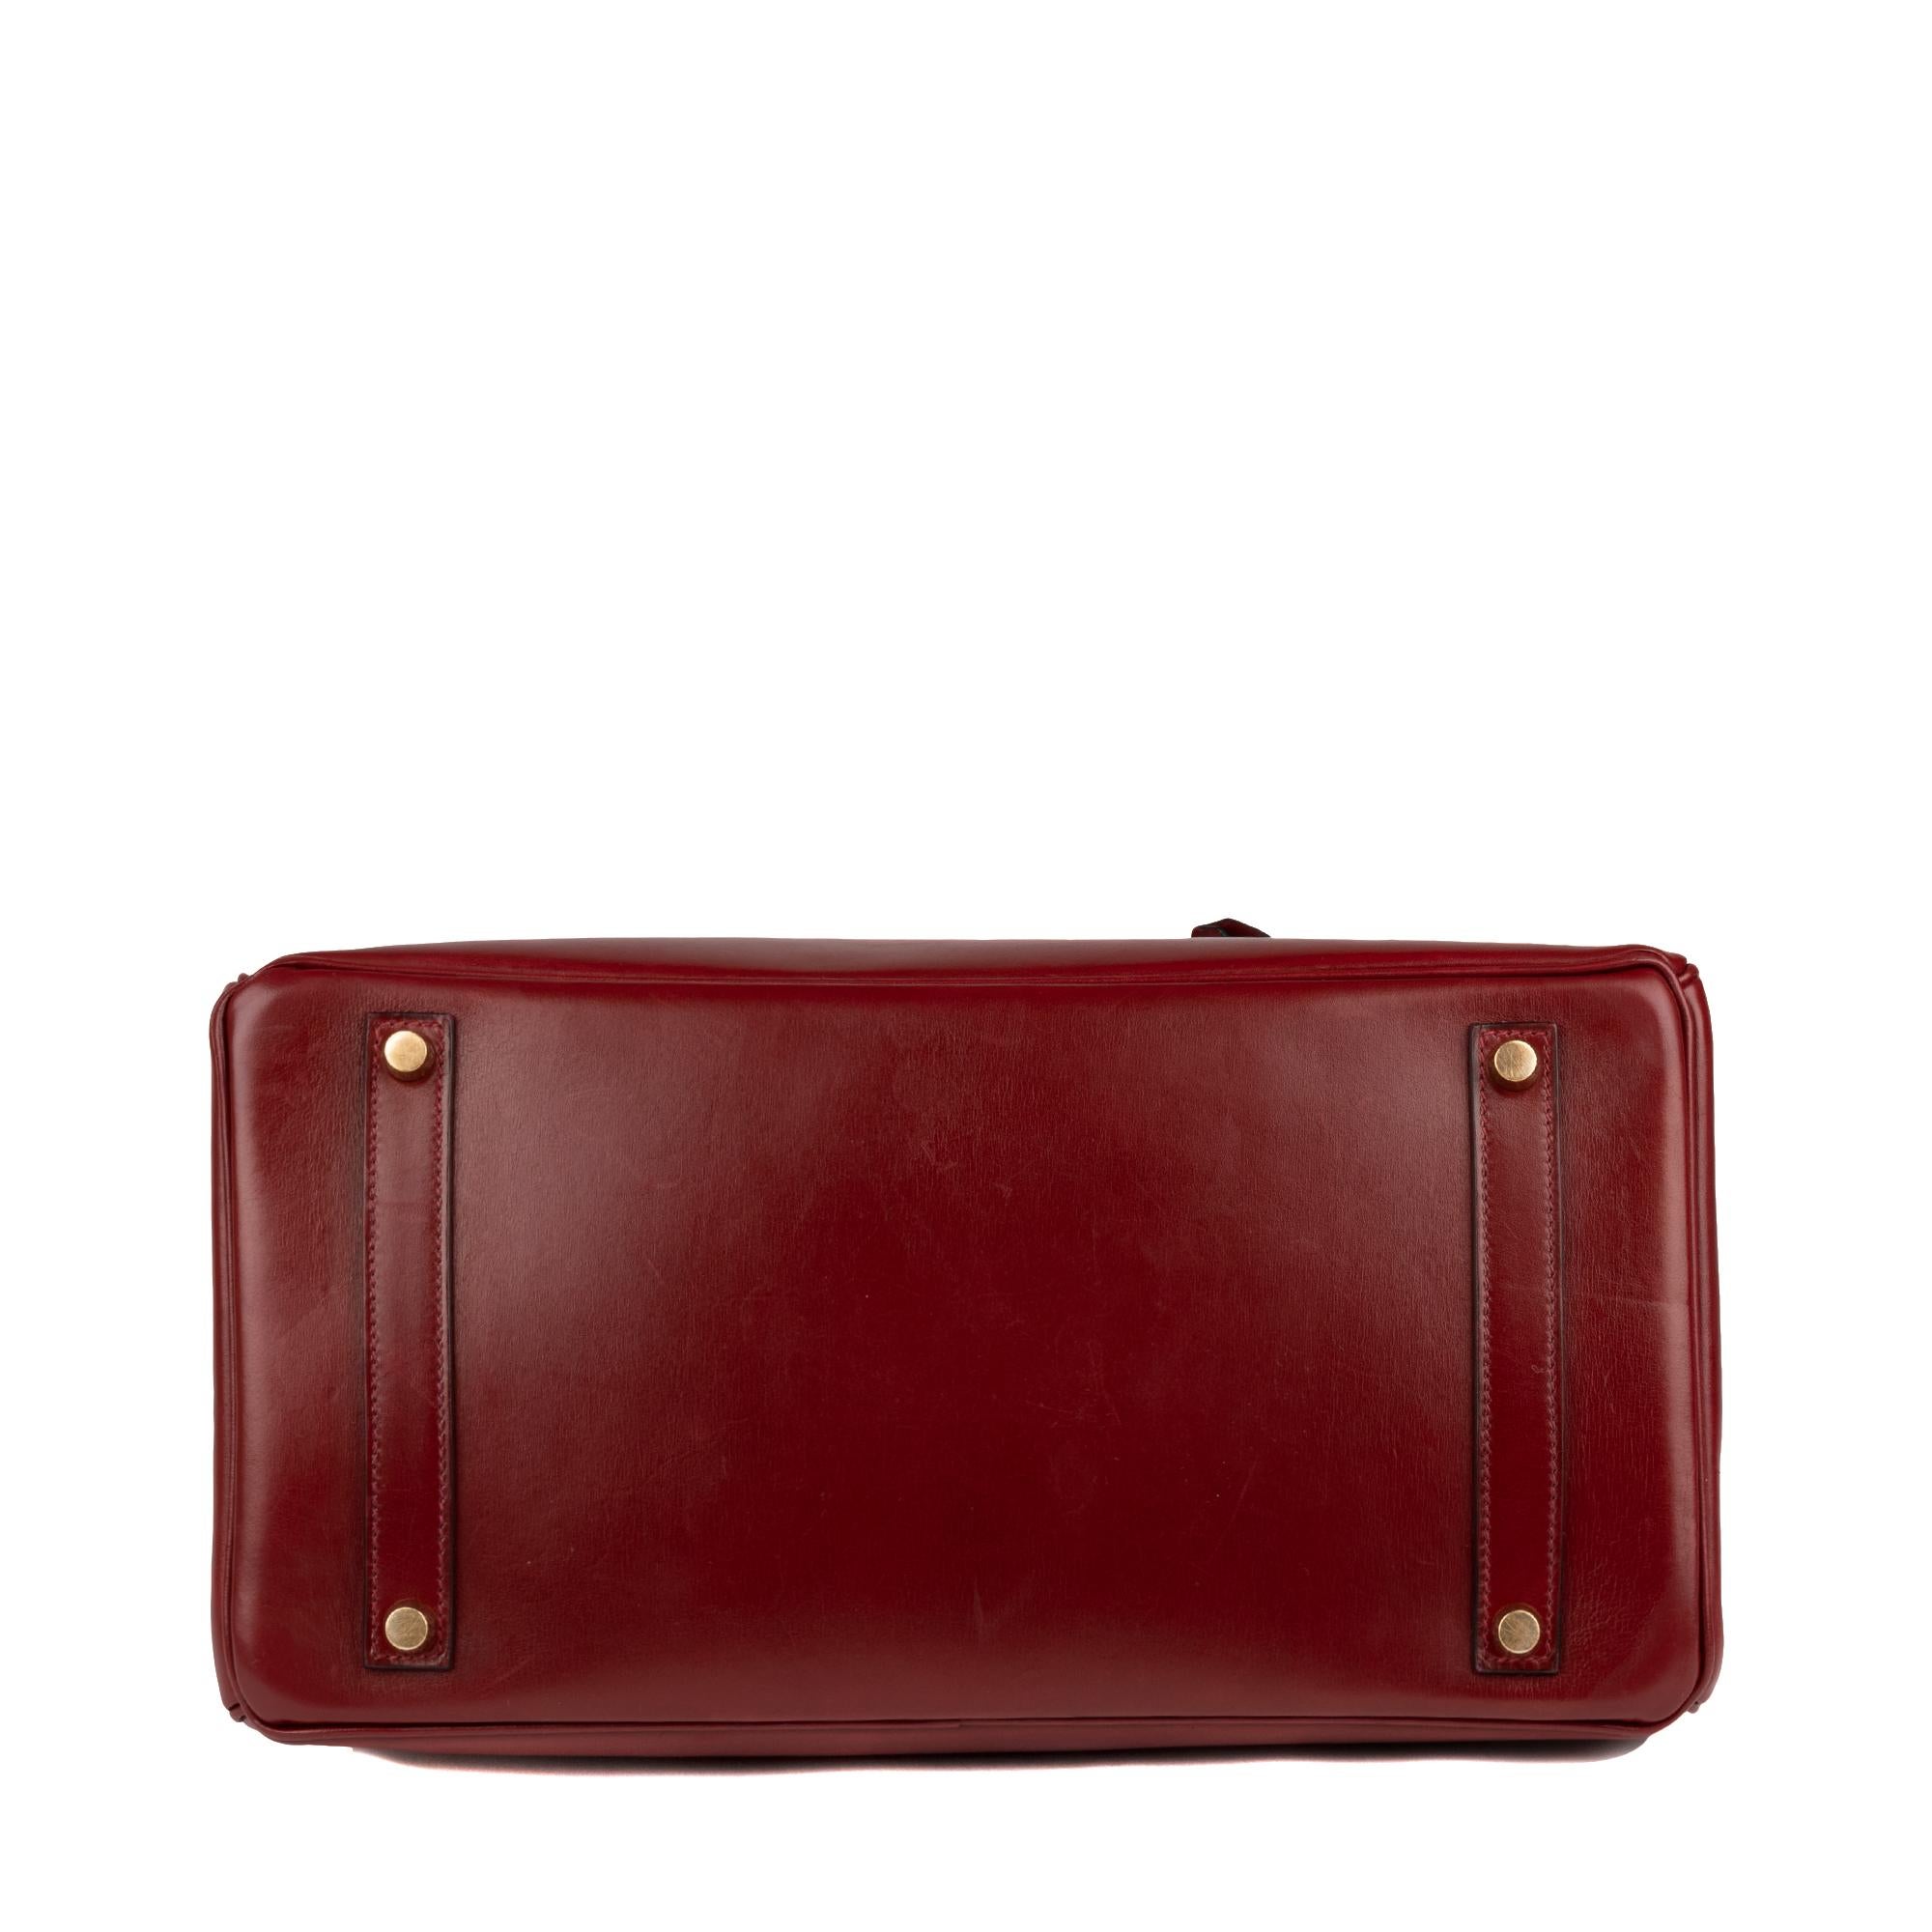 Hermes Birkin35cm Burgundy Box Leather Handbag 3